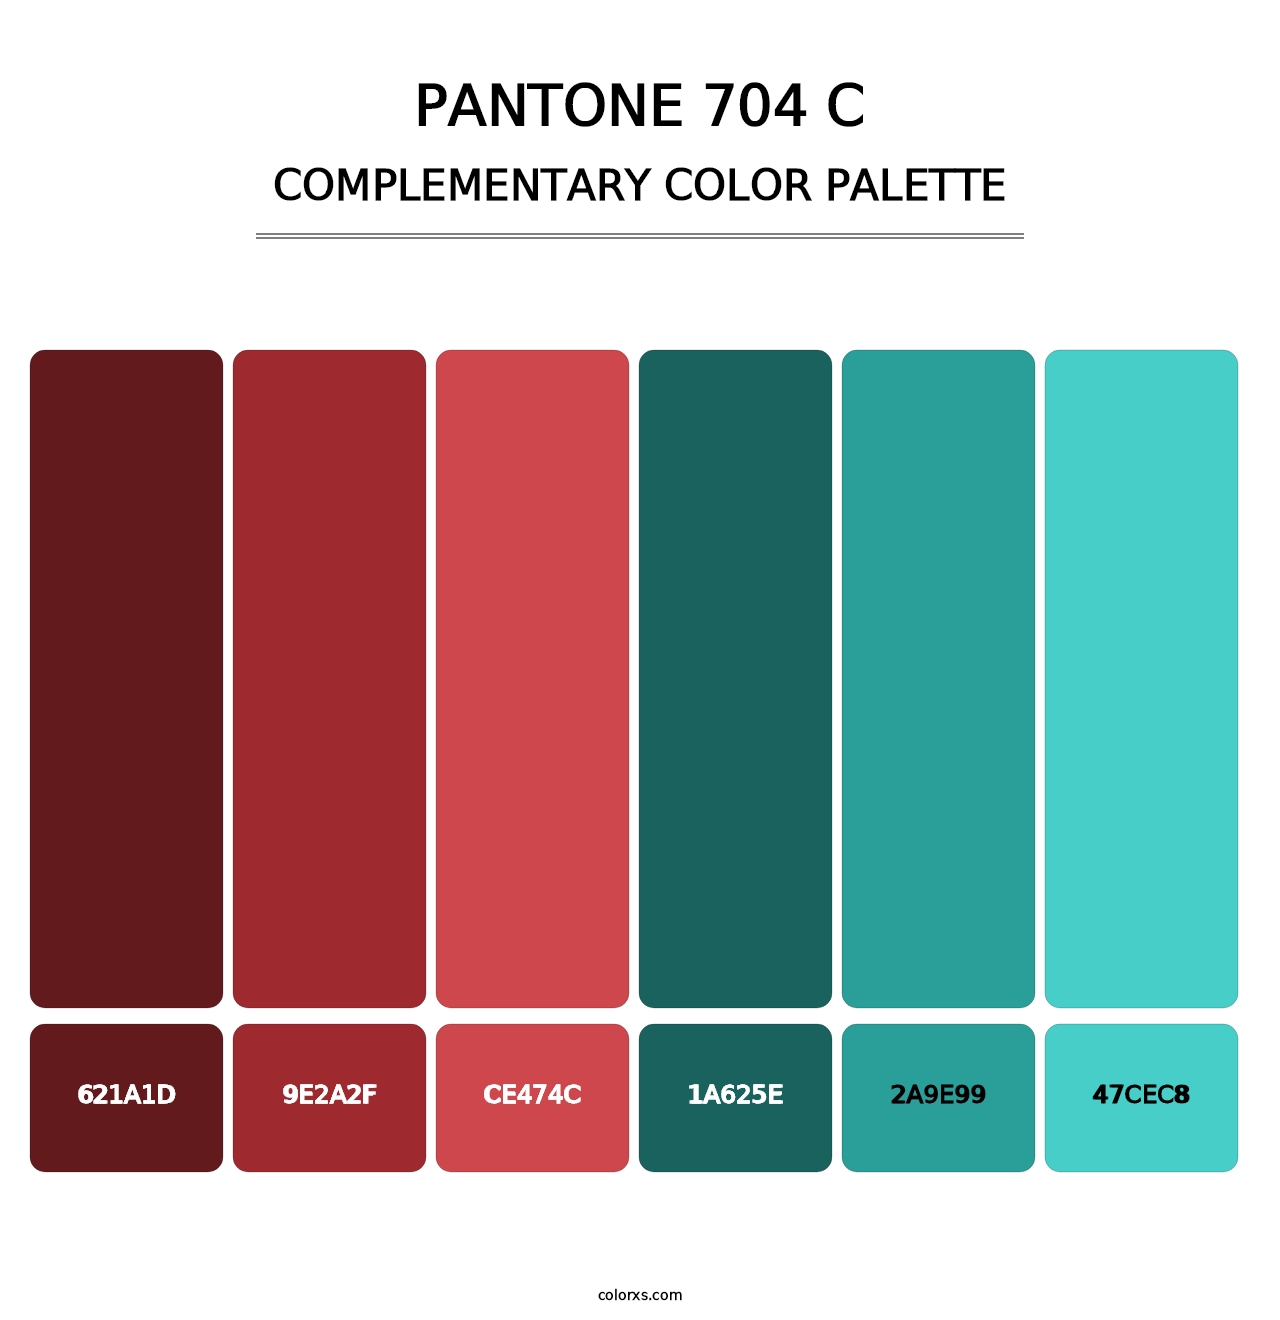 PANTONE 704 C - Complementary Color Palette